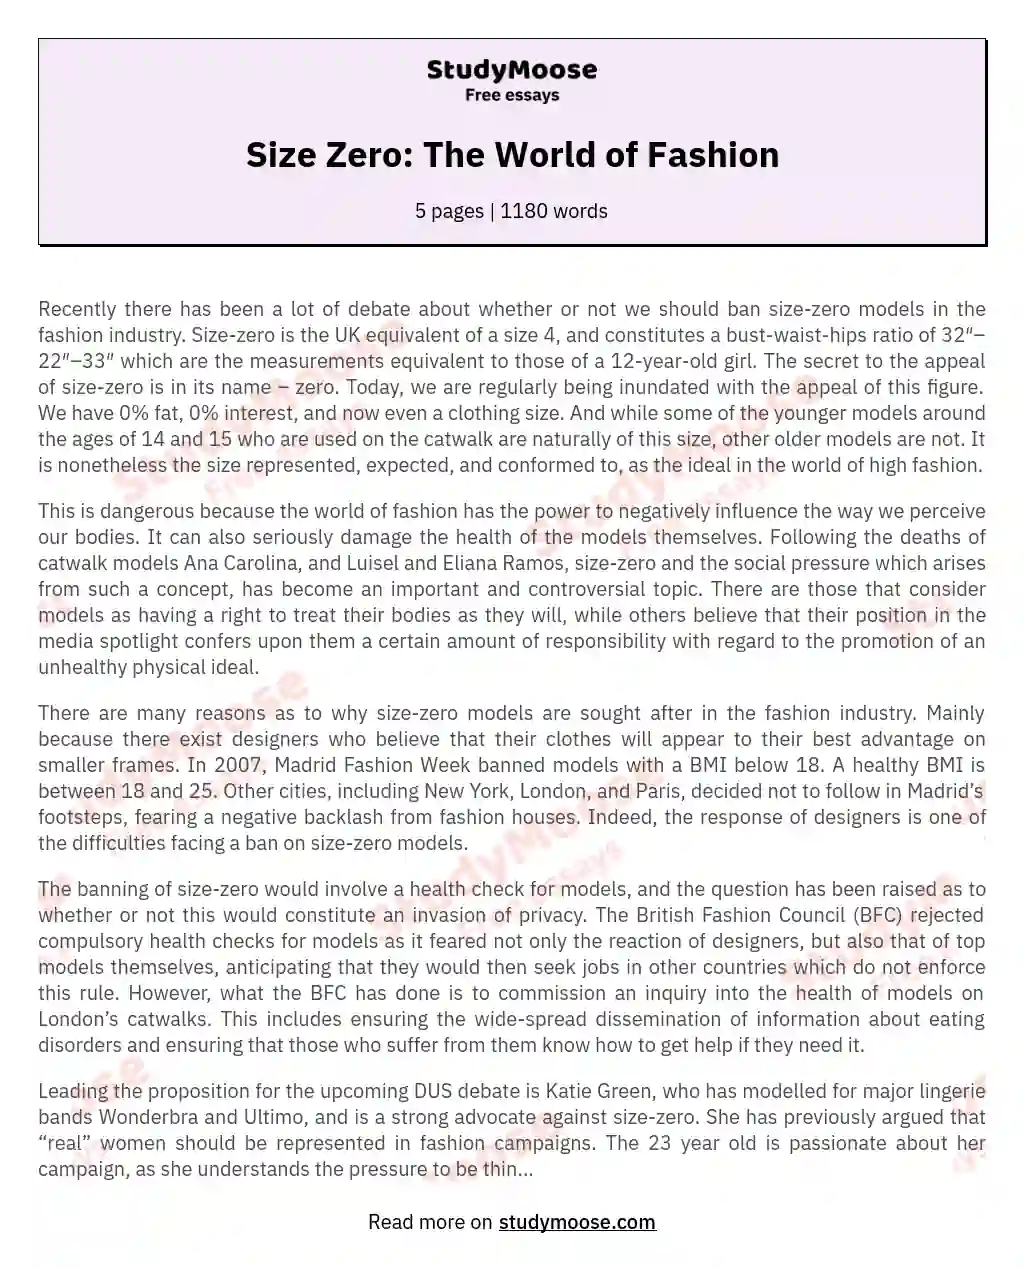 Size Zero: The World of Fashion